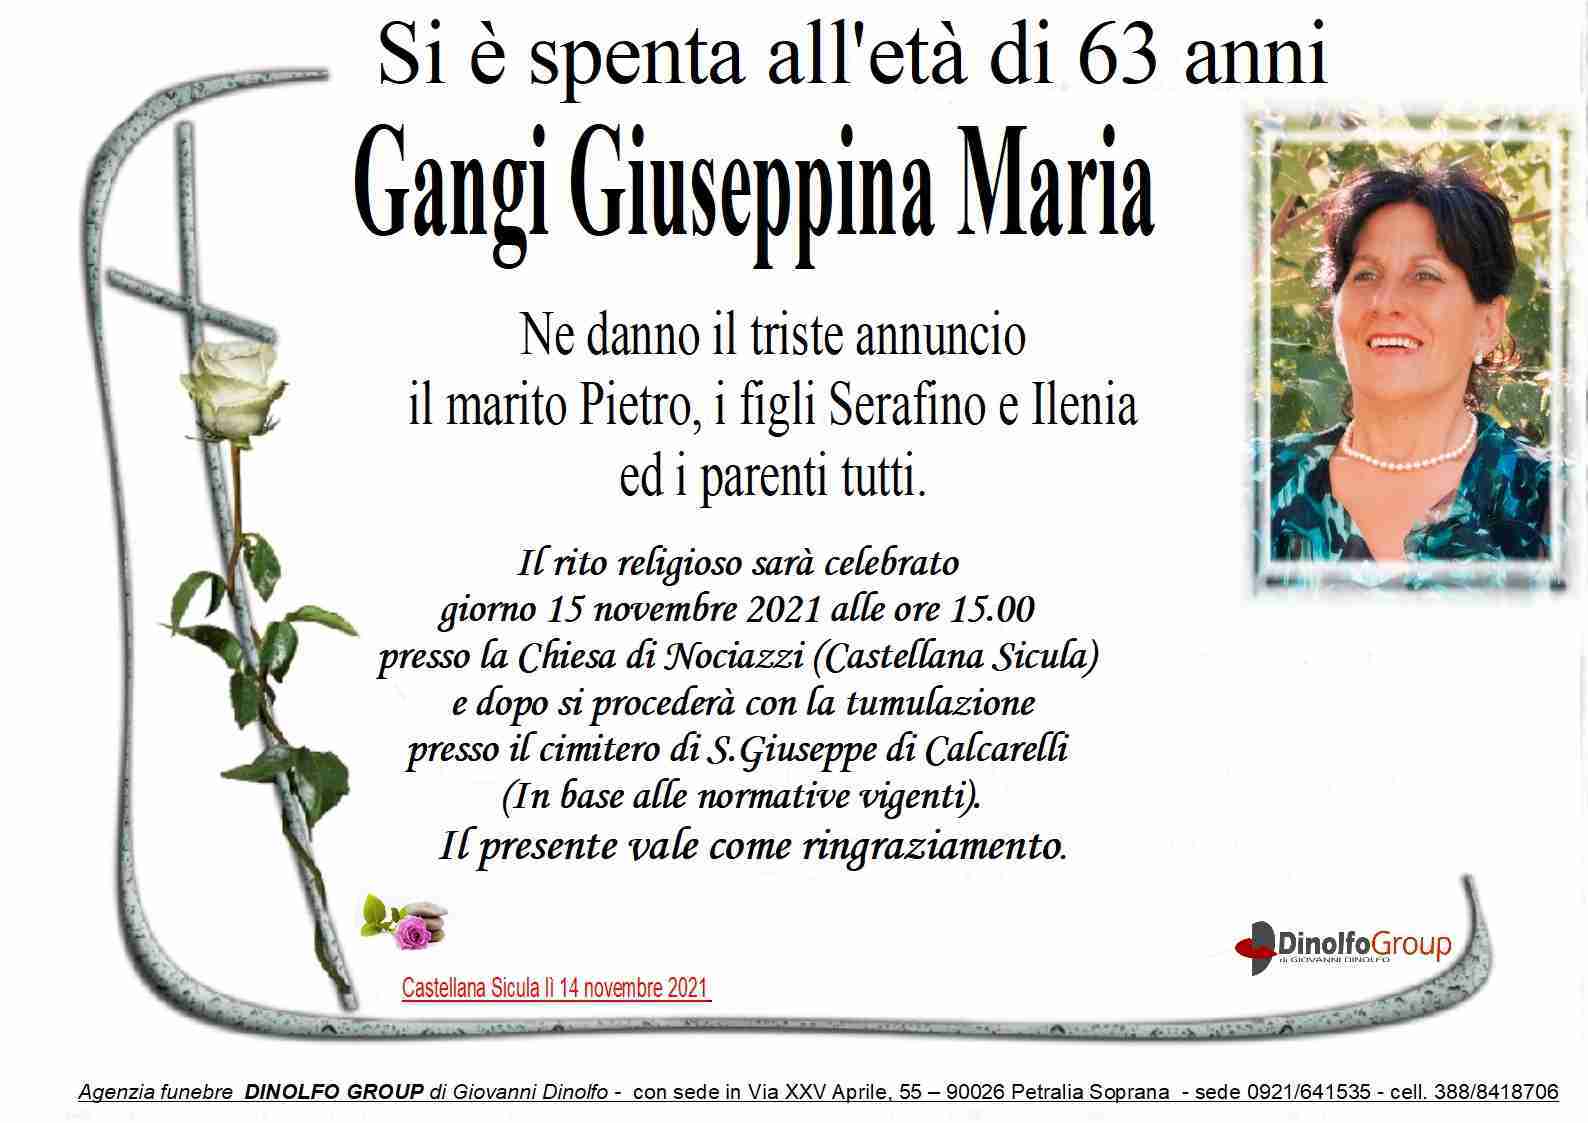 Giuseppina Maria Gangi